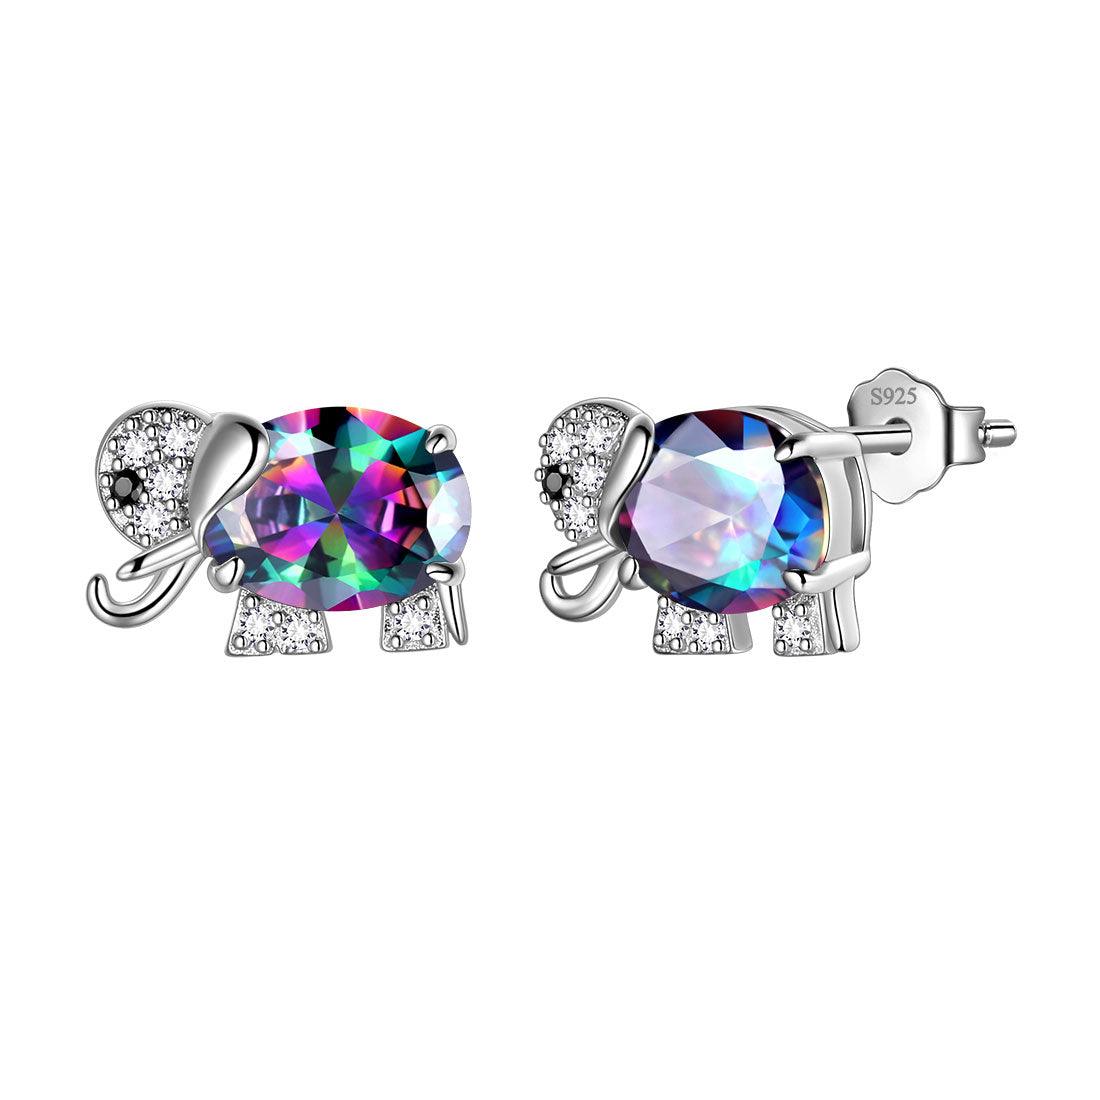 Elephant Necklace Earrings Ring Jewelry Mystic Rainbow Topaz - Necklaces - Aurora Tears Jewelry